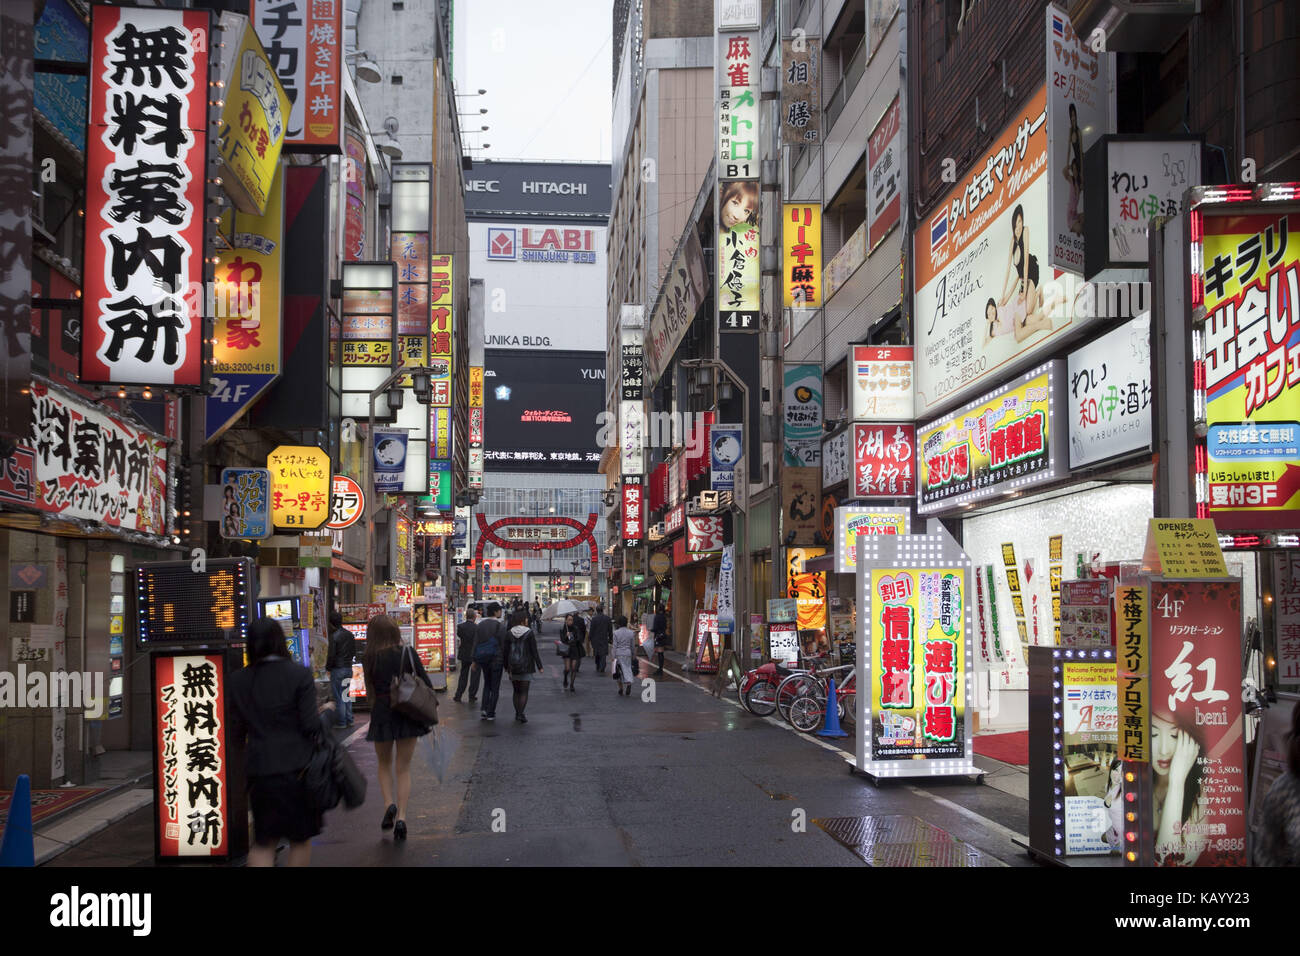 Japan, Tokyo, Shinjuku area, Kabuki-cho entertainment district, Stock Photo